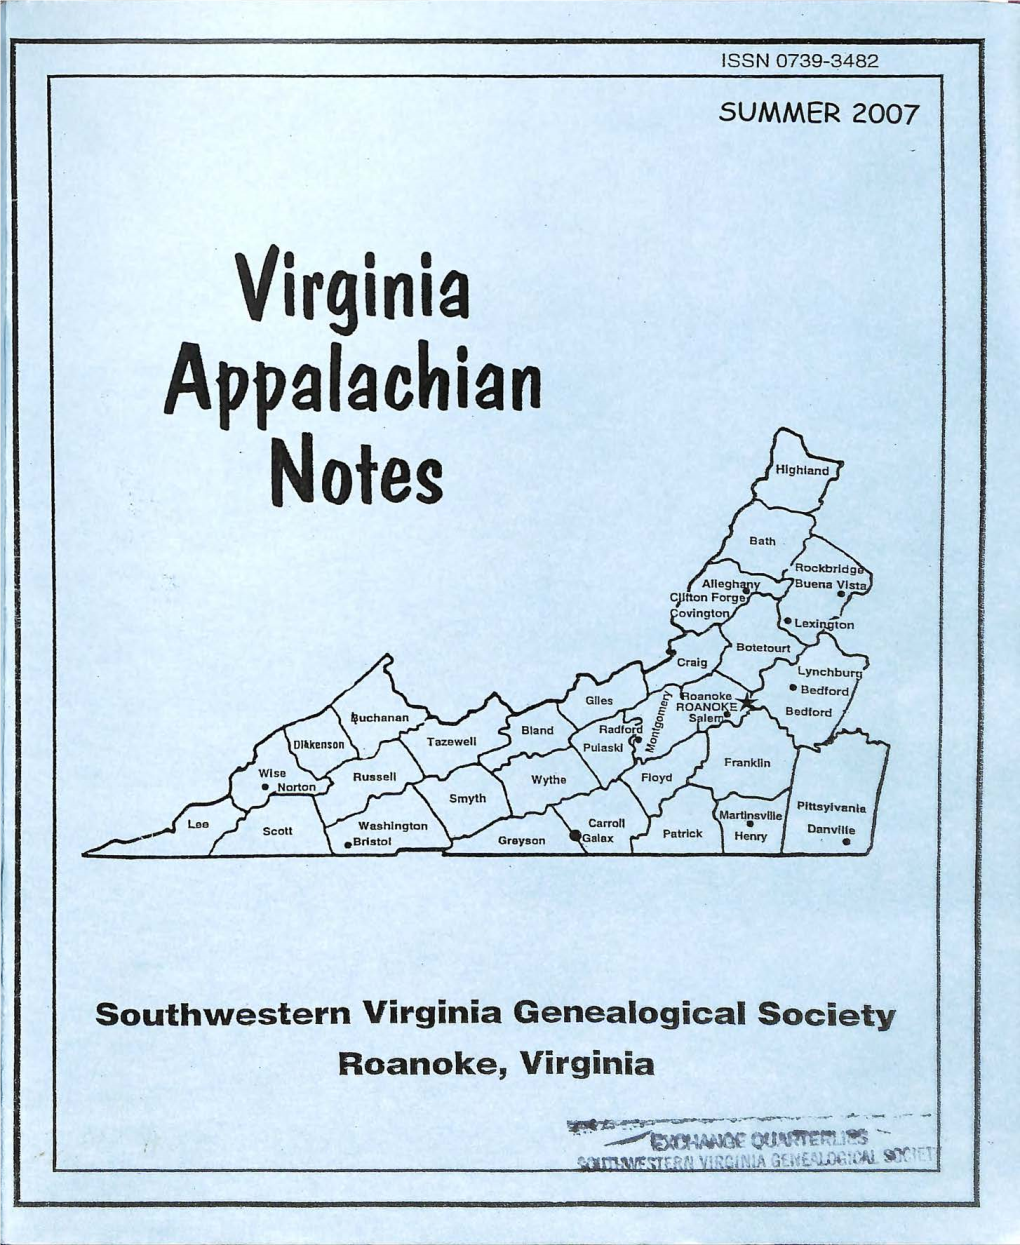 Southwestern Virginia Genealogical Society Roanoke, Virginia